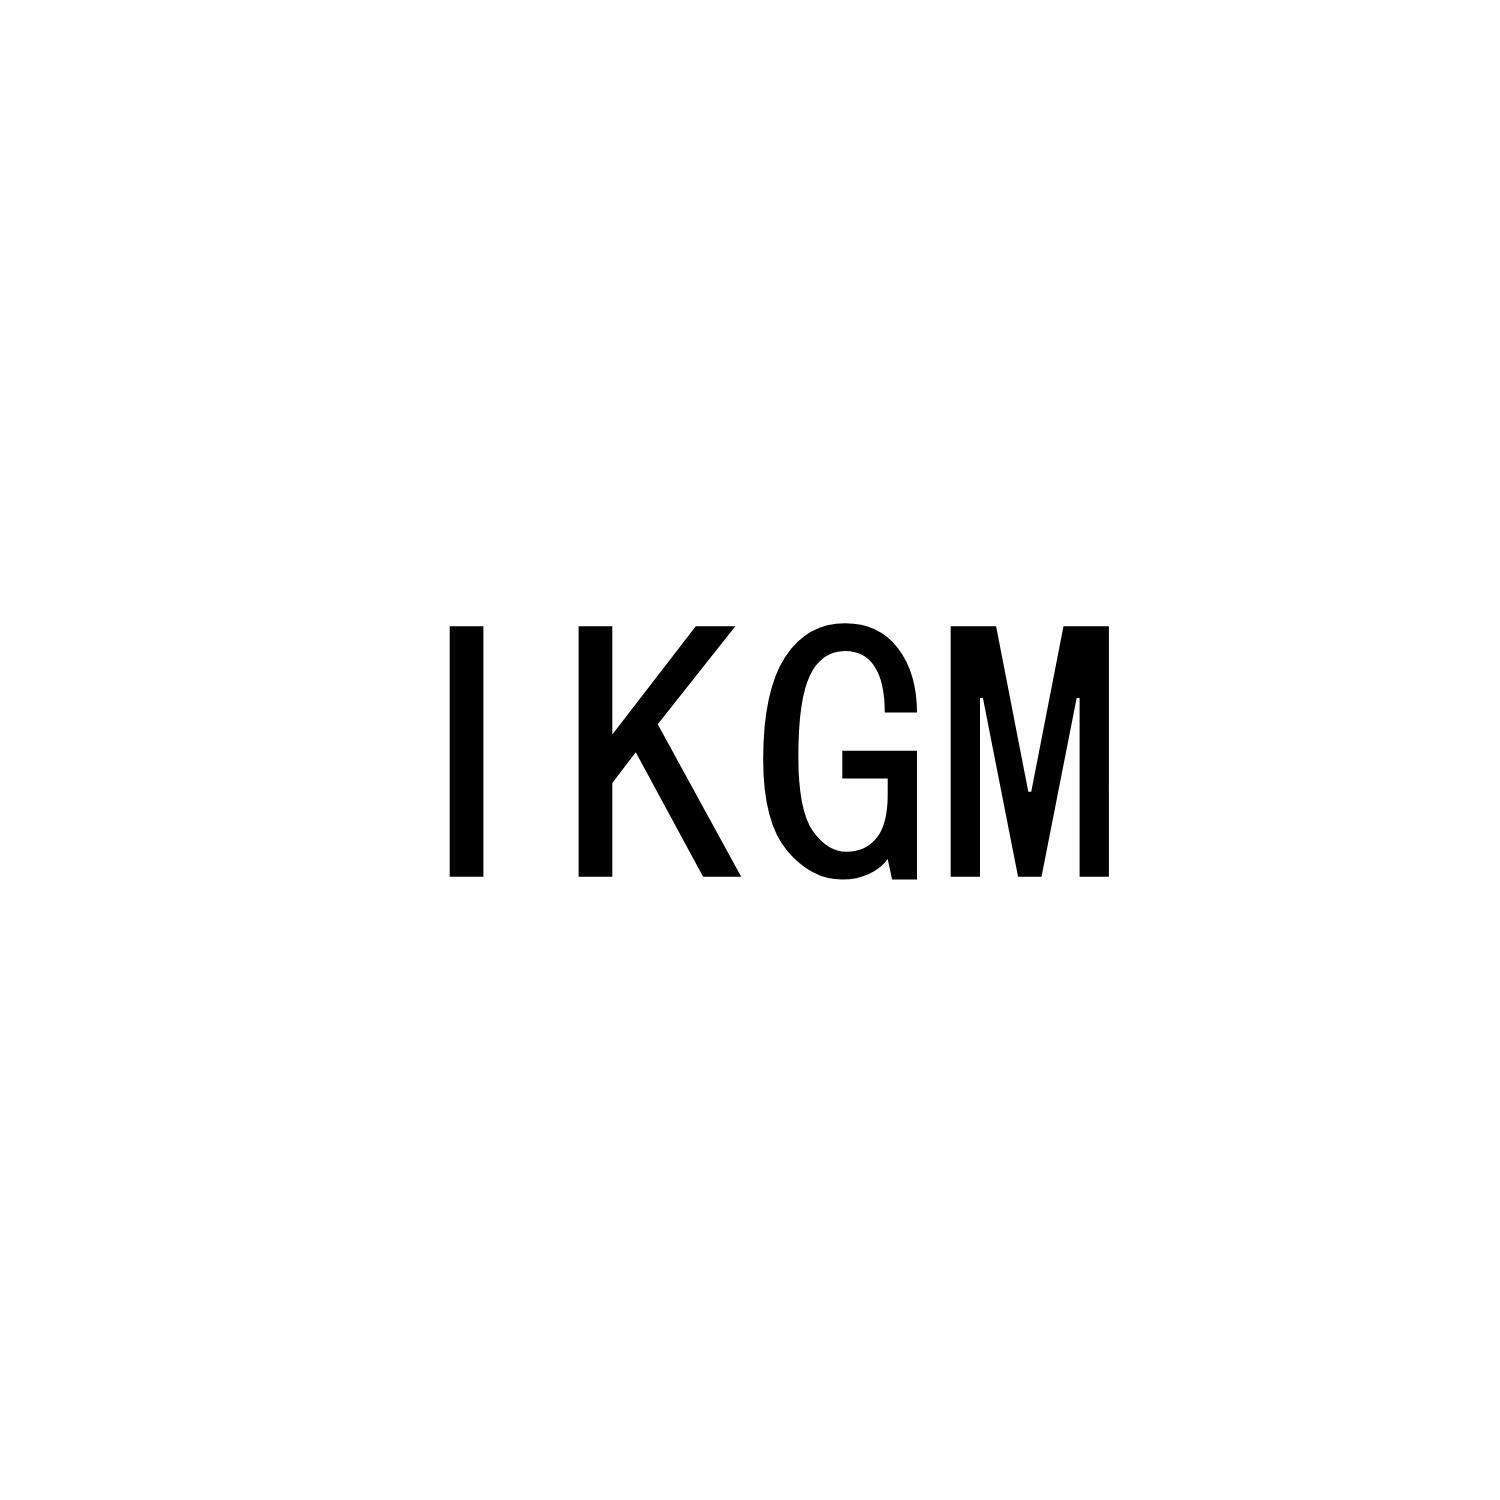 IKGM